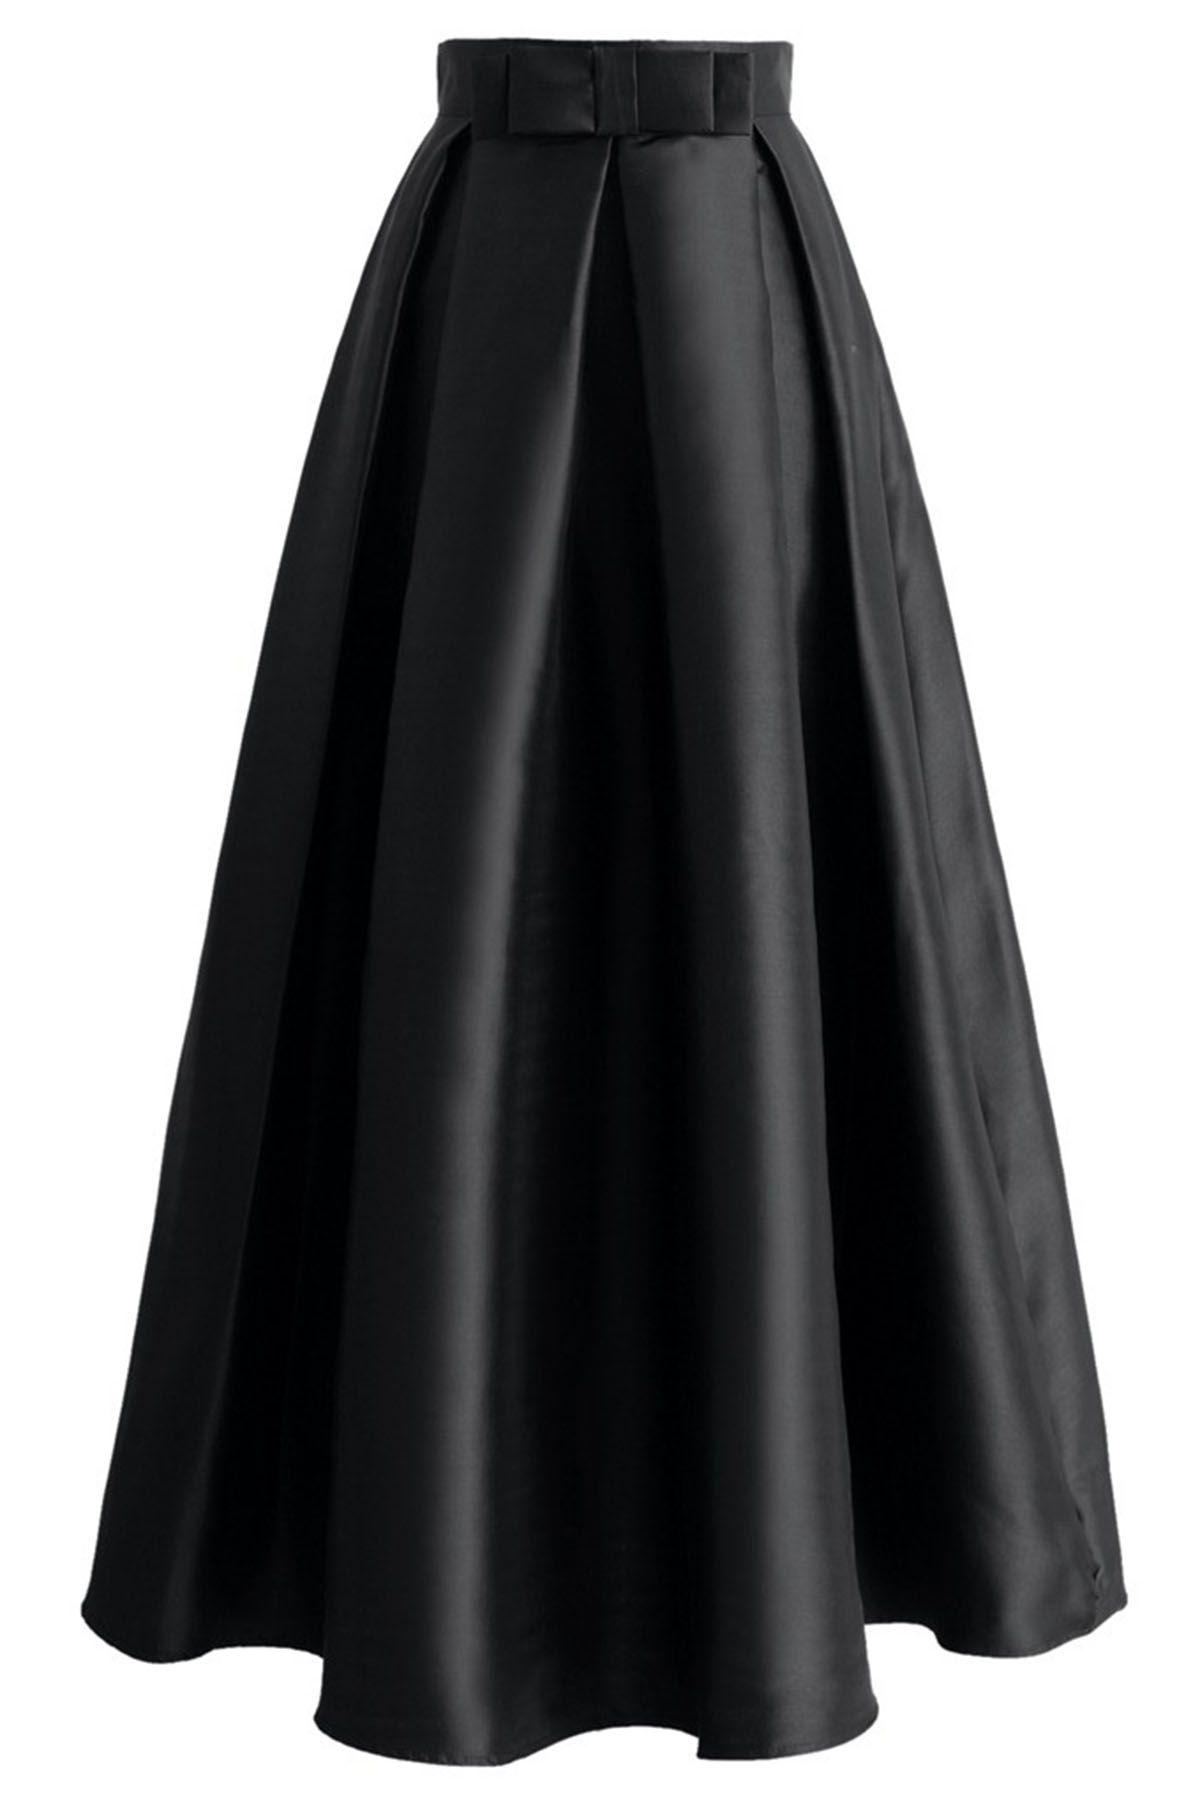 Black Satin Prom Skirt, Tutu Skirts, Party Dress, 2017 Spring Dress